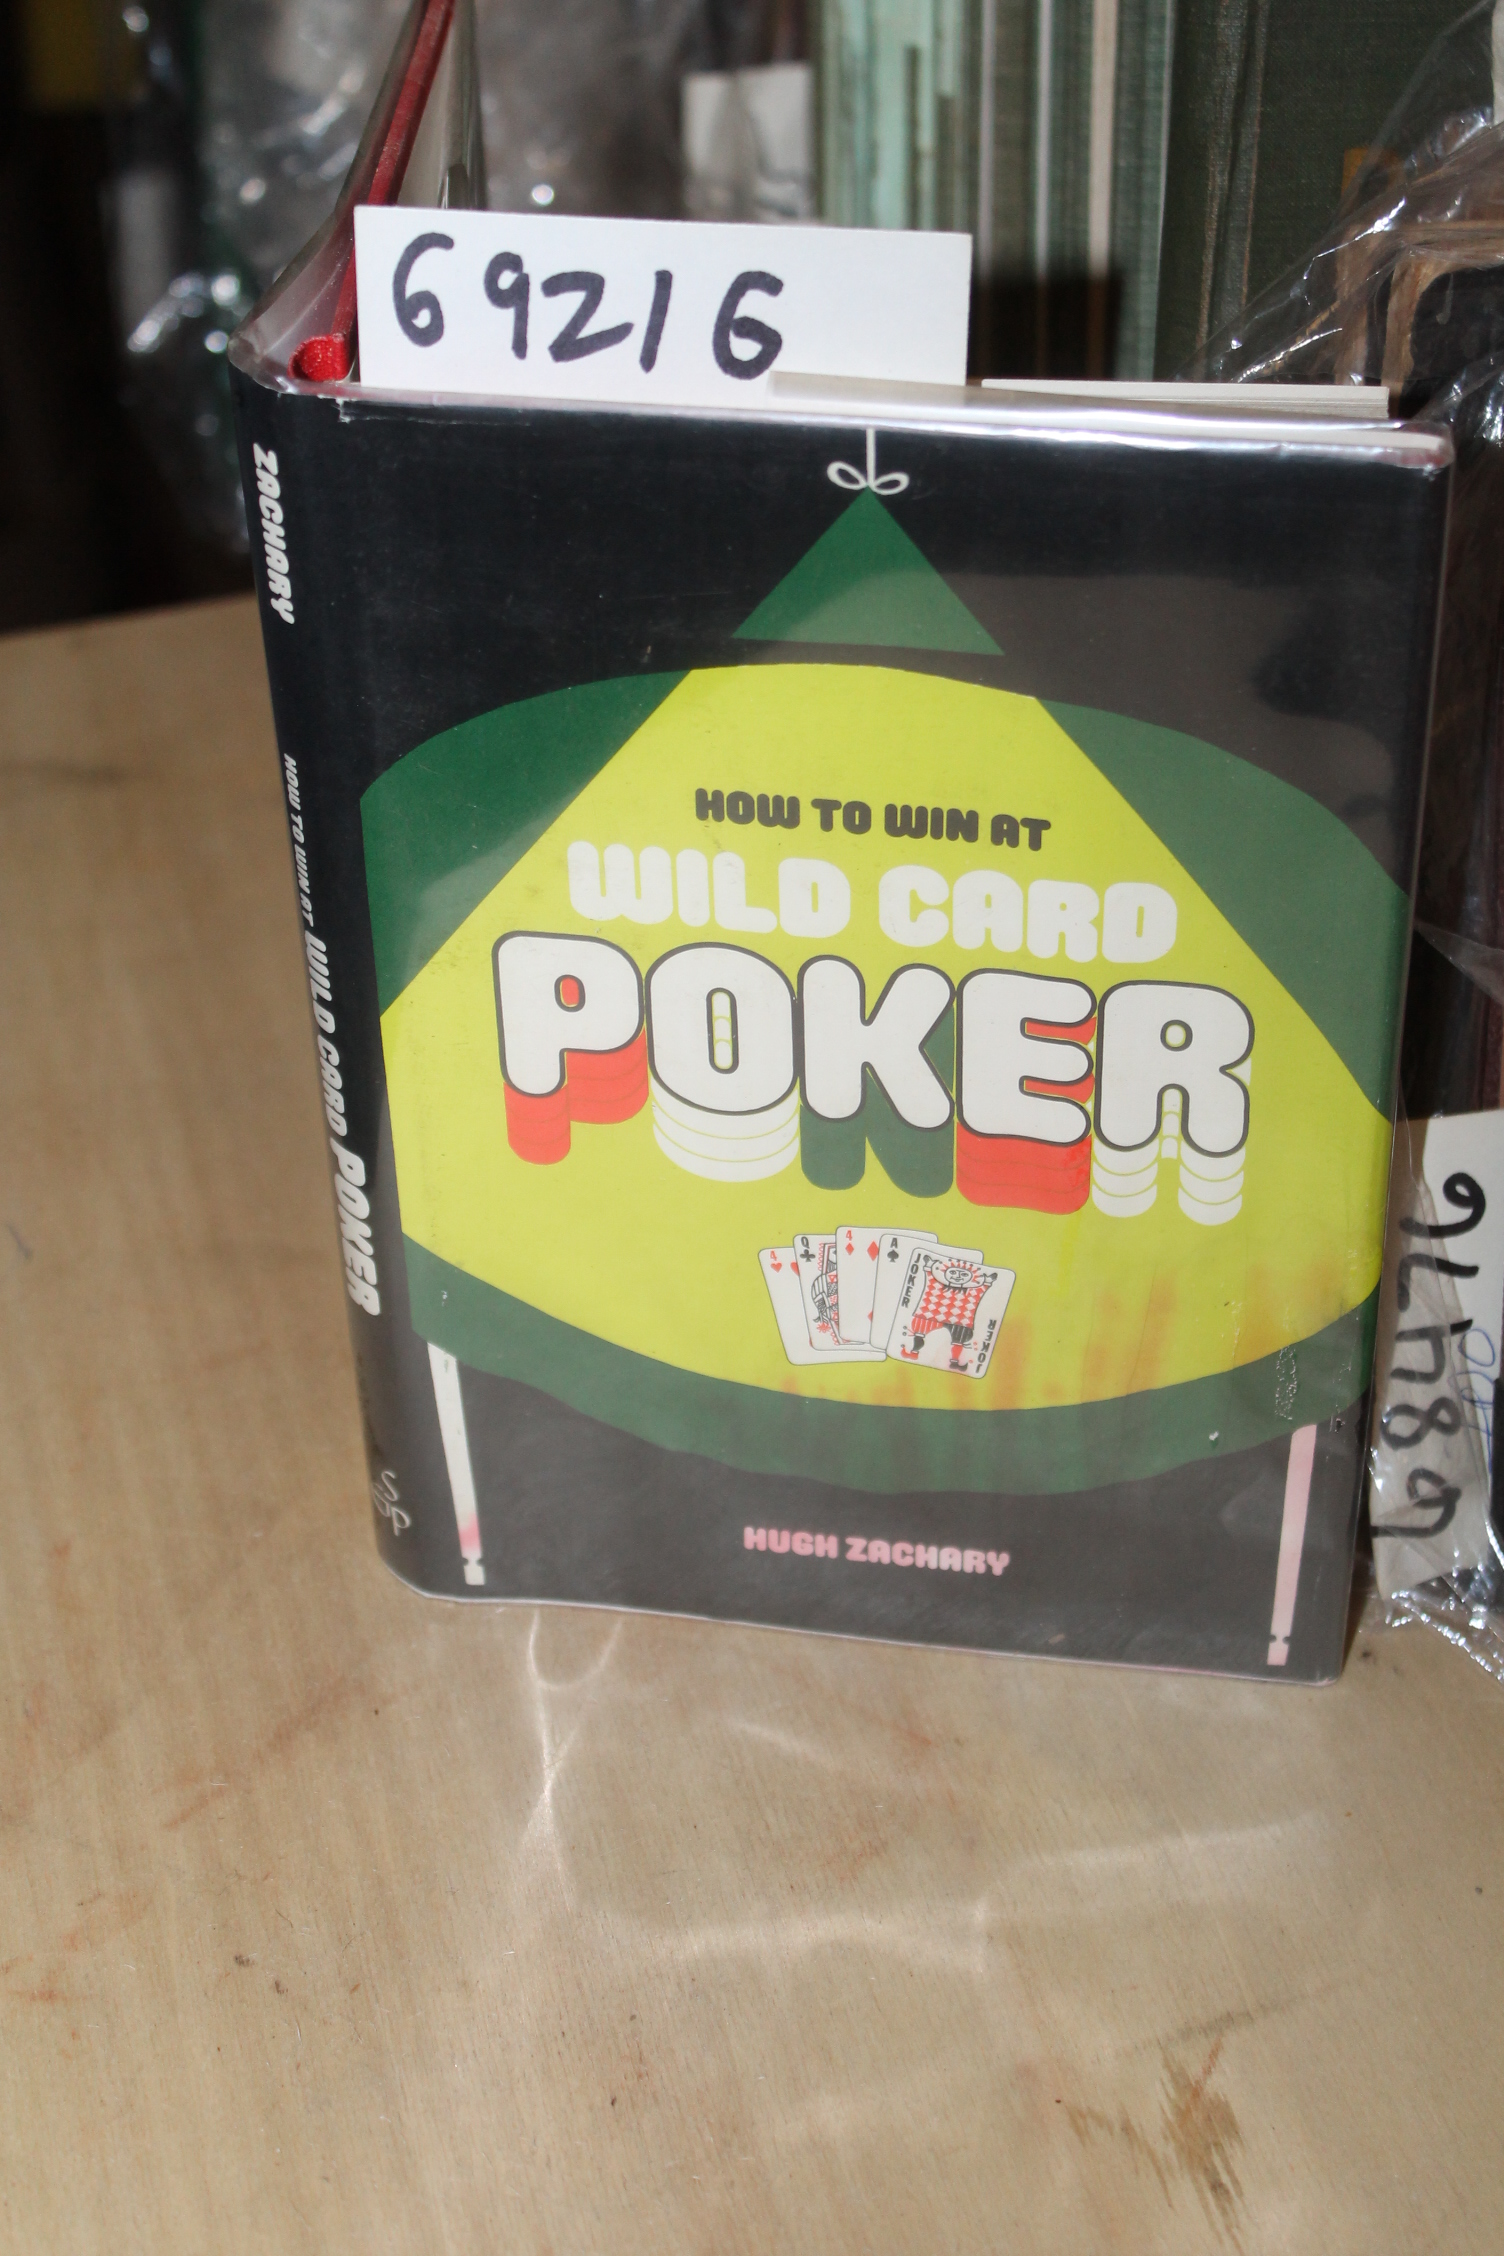 Zachary, Hugh: How to win at Wild Card Poker